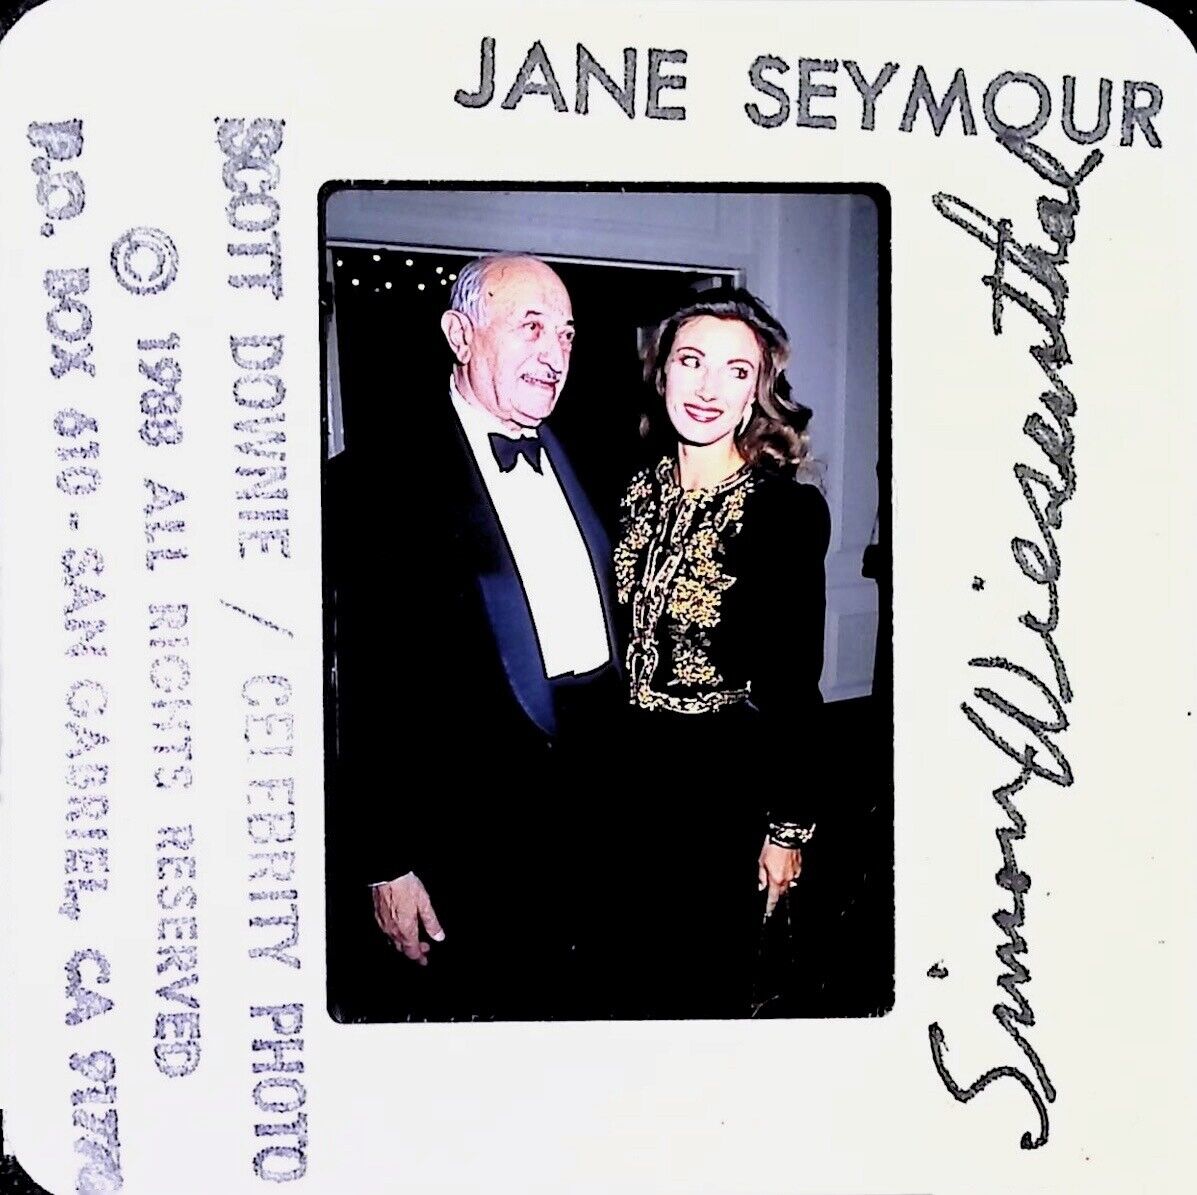 1988 JANE SEYMOUR - 35MM SLIDE L.9.9.17